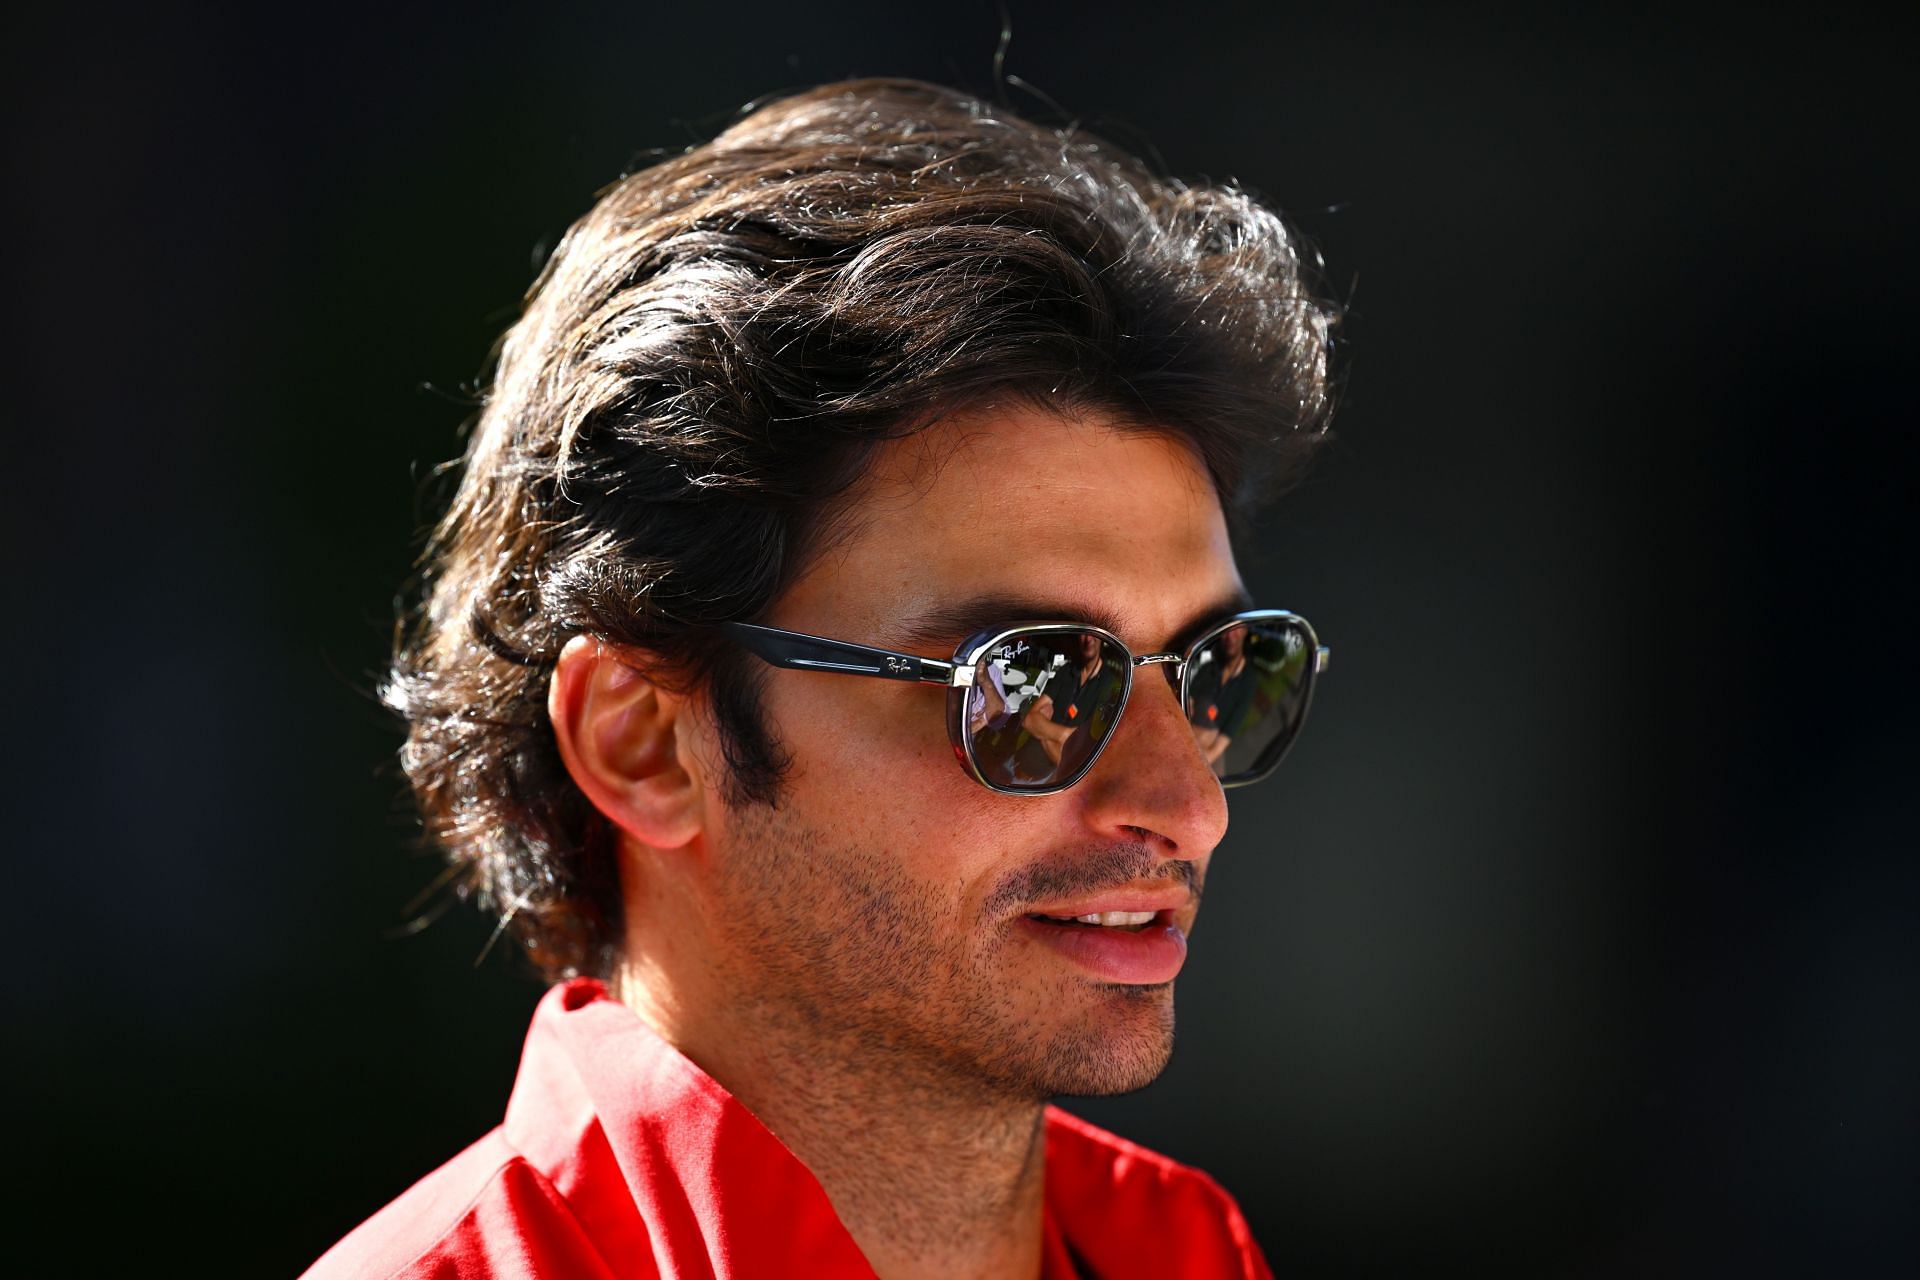 Carlos Sainz at the F1 Grand Prix of Australia - Practice